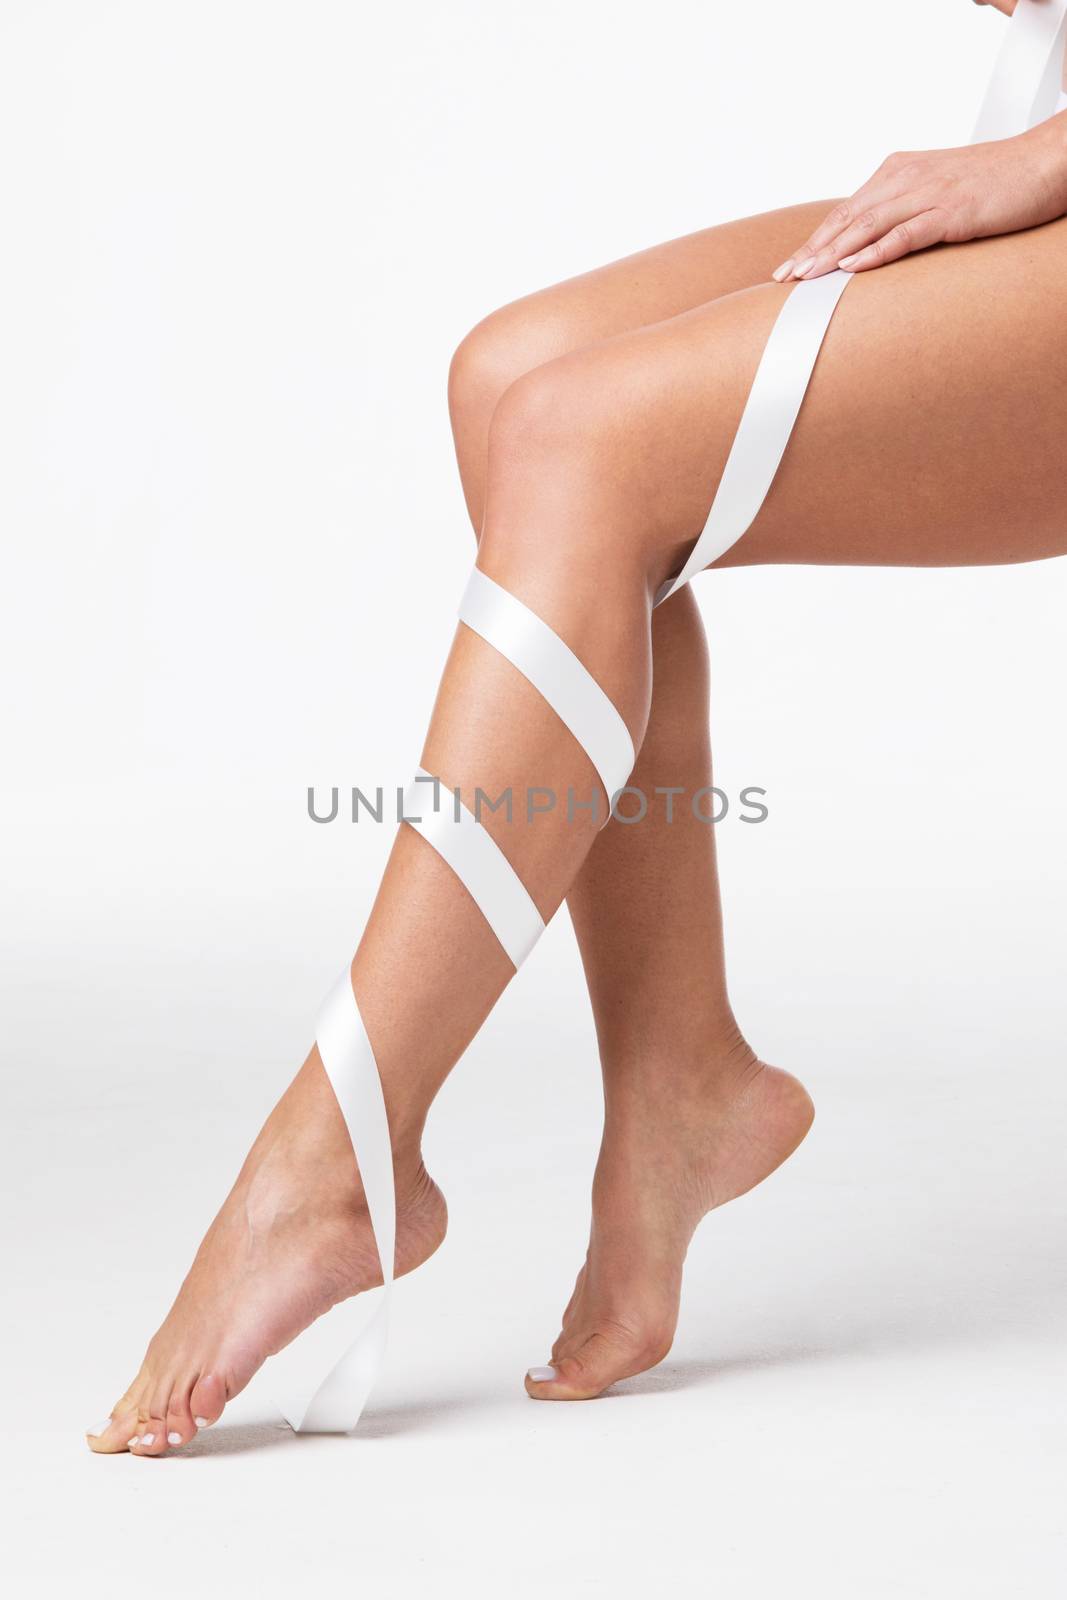 Women's legs with white ribbon by Yellowj